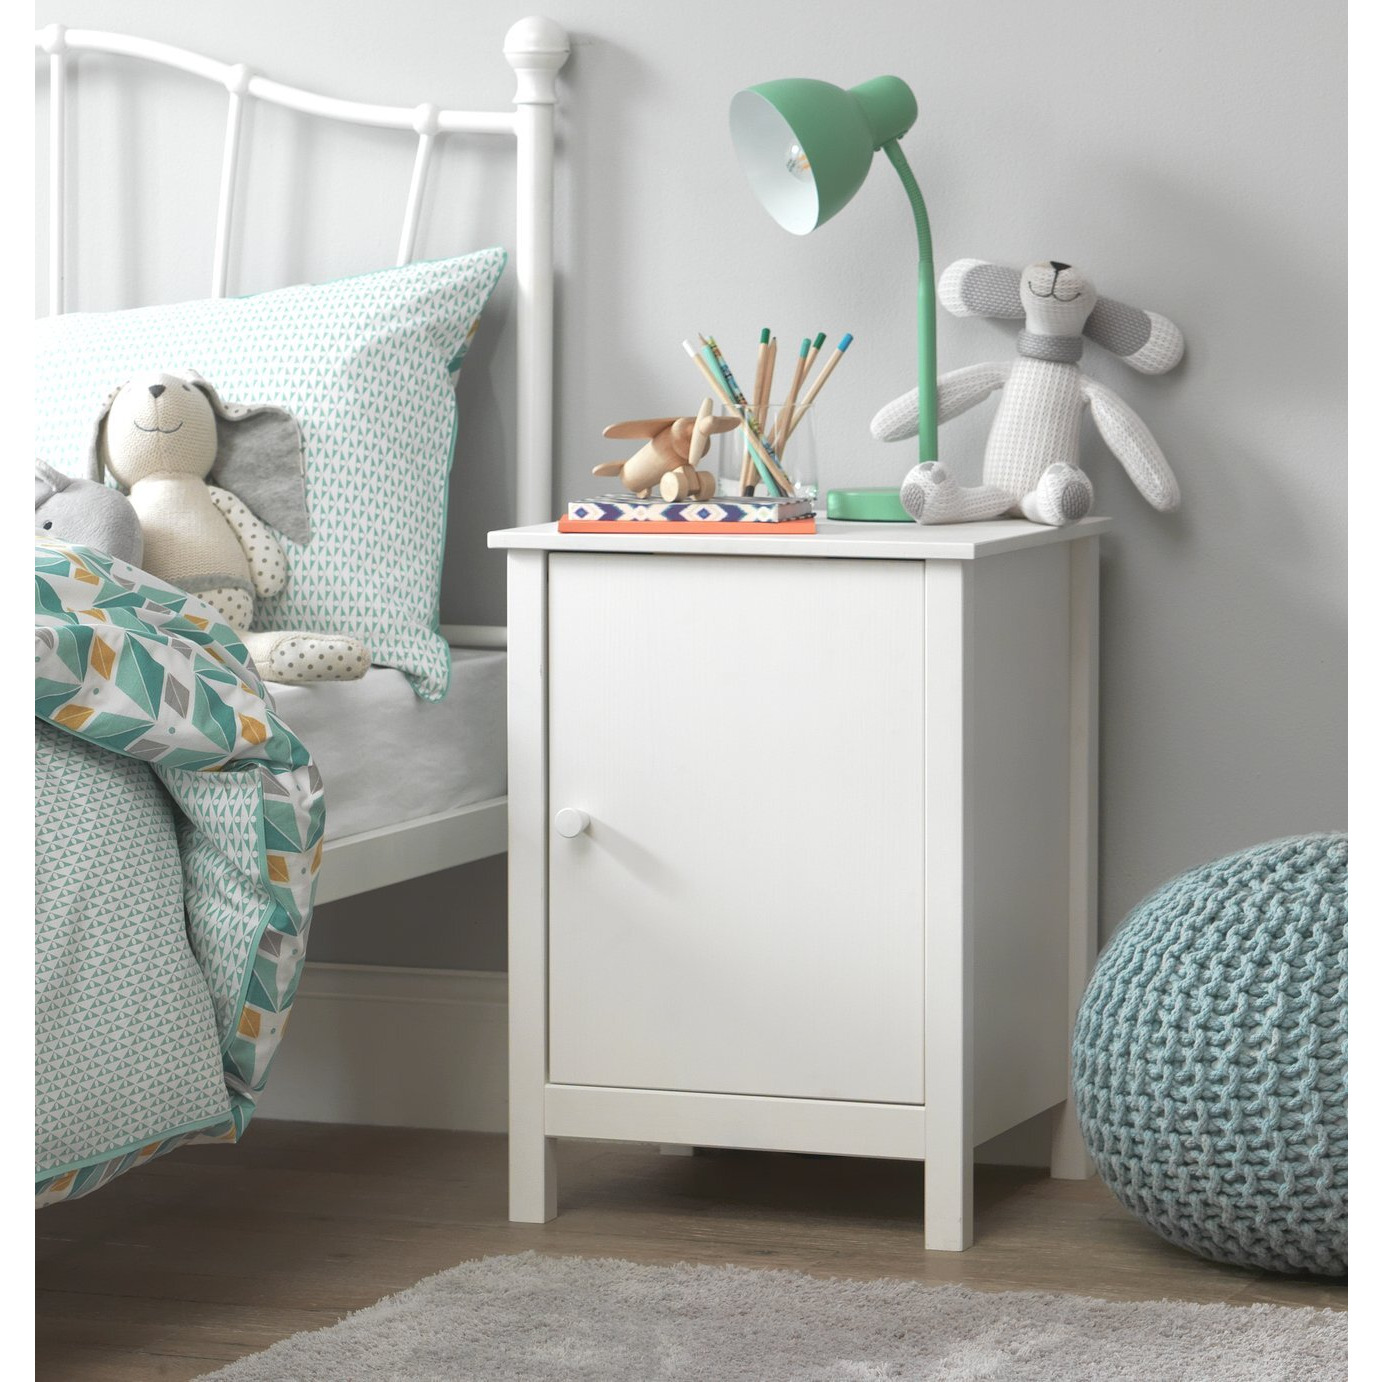 Argos Home Kids Scandinavia Kids Bedside Table - White - image 1